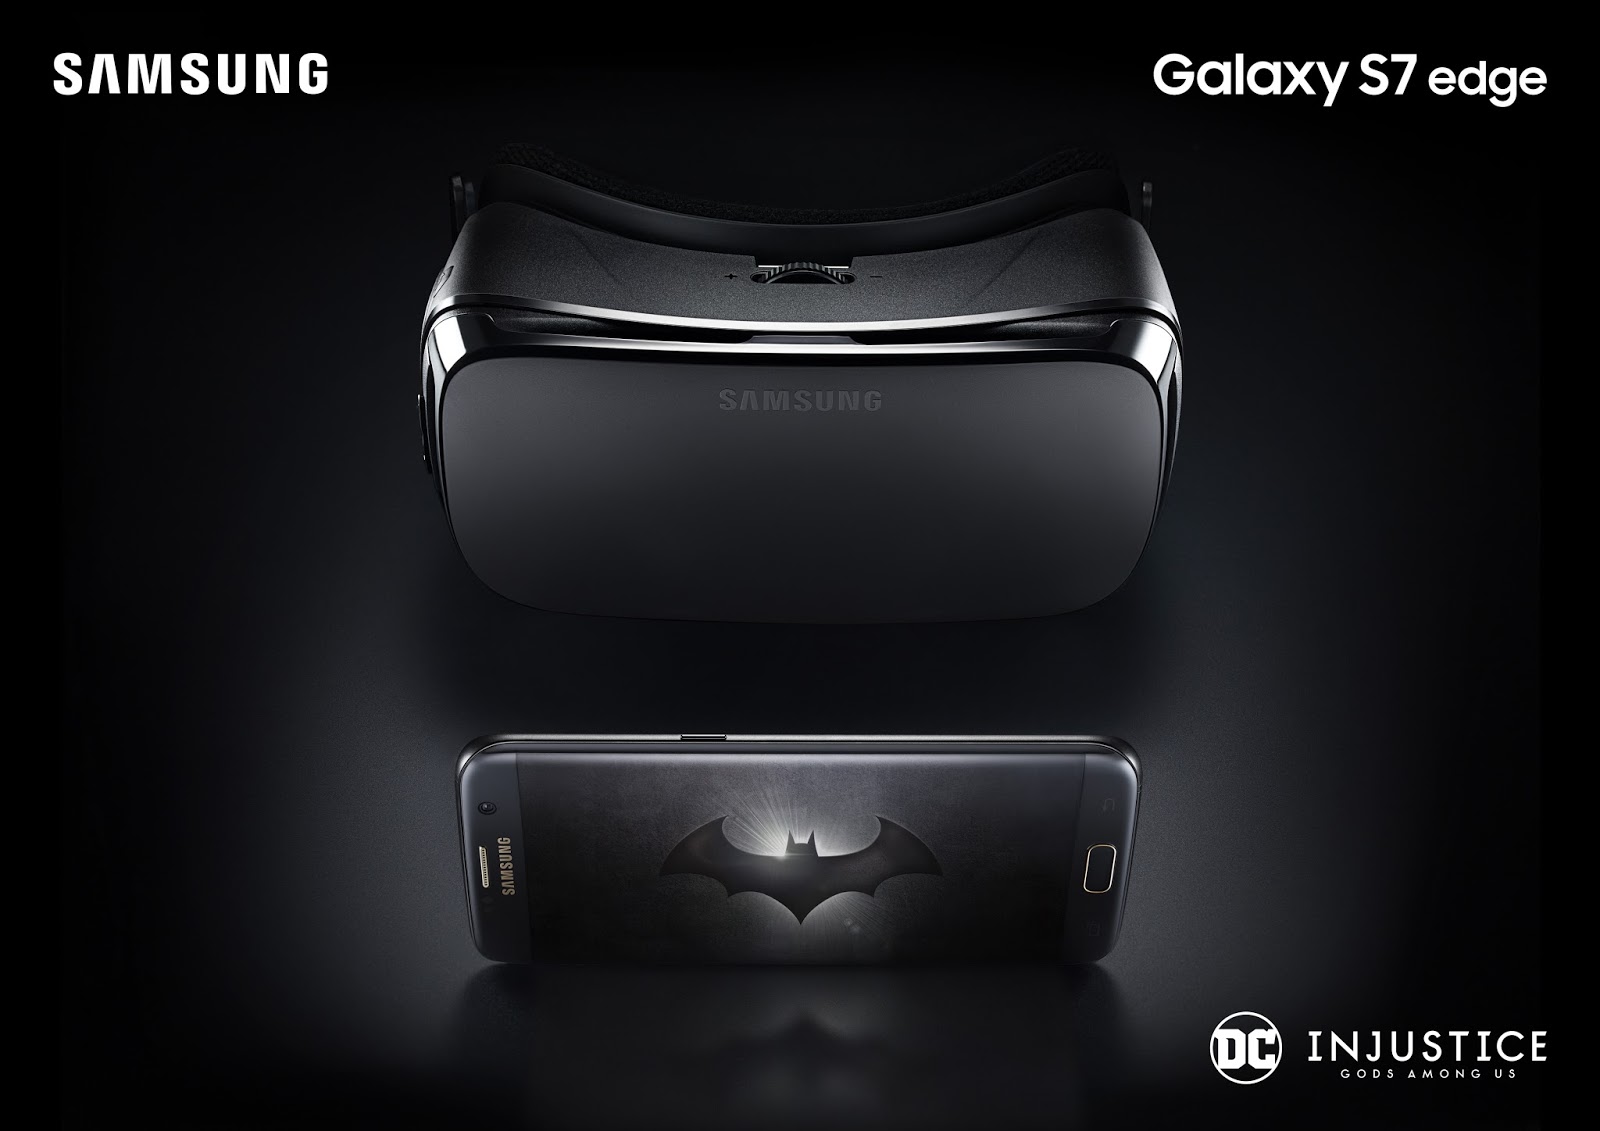 The Dark Knight Ph: Samsung Galaxy S7 Edge Injustice Edition gadget review